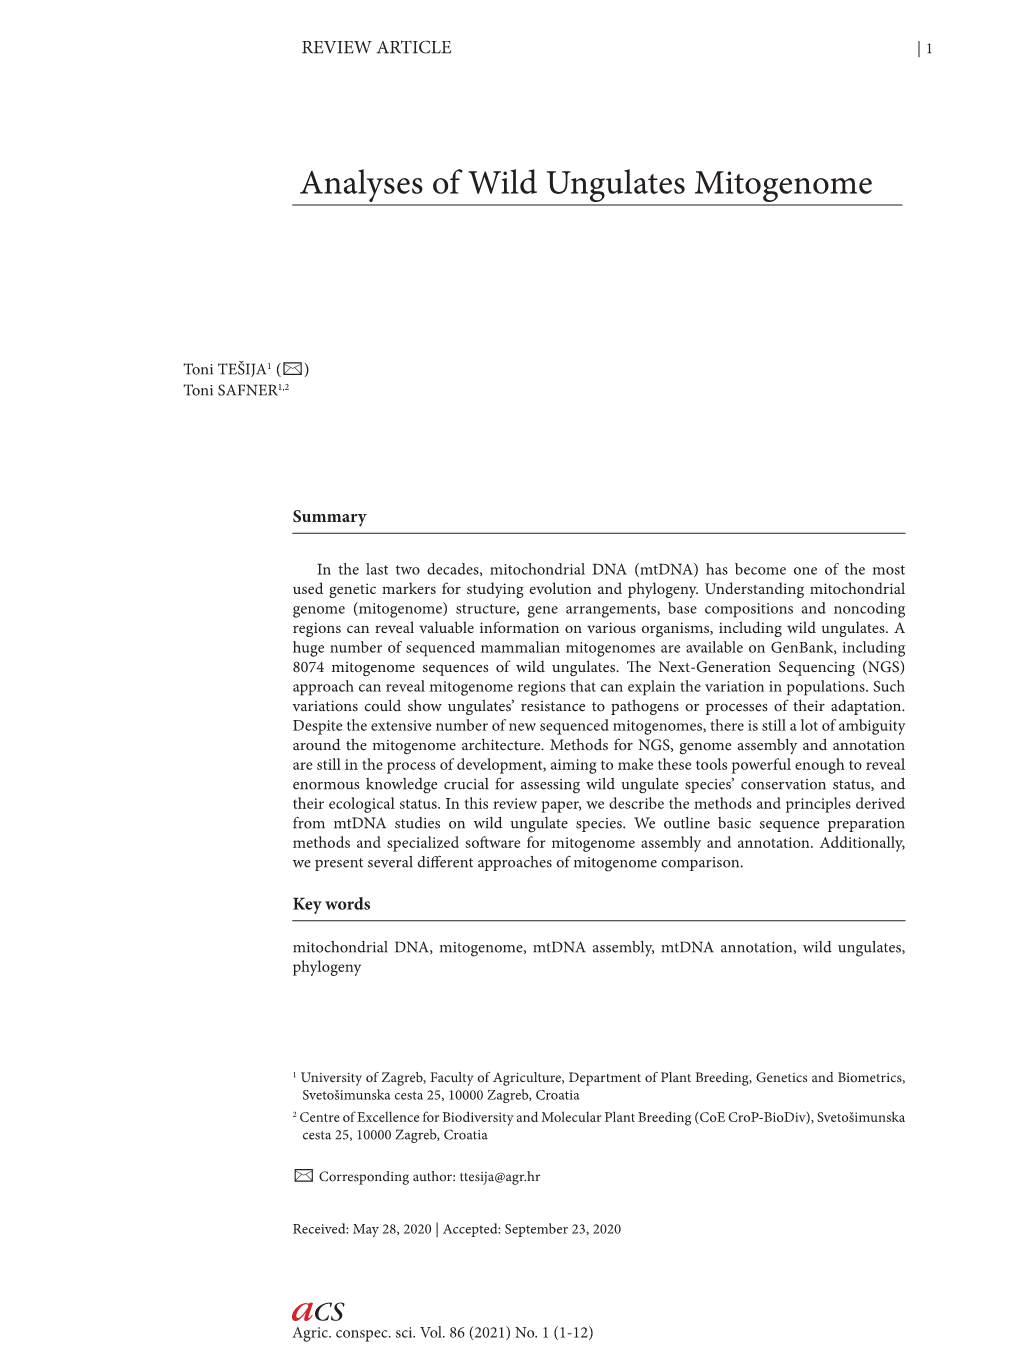 Analyses of Wild Ungulates Mitogenome